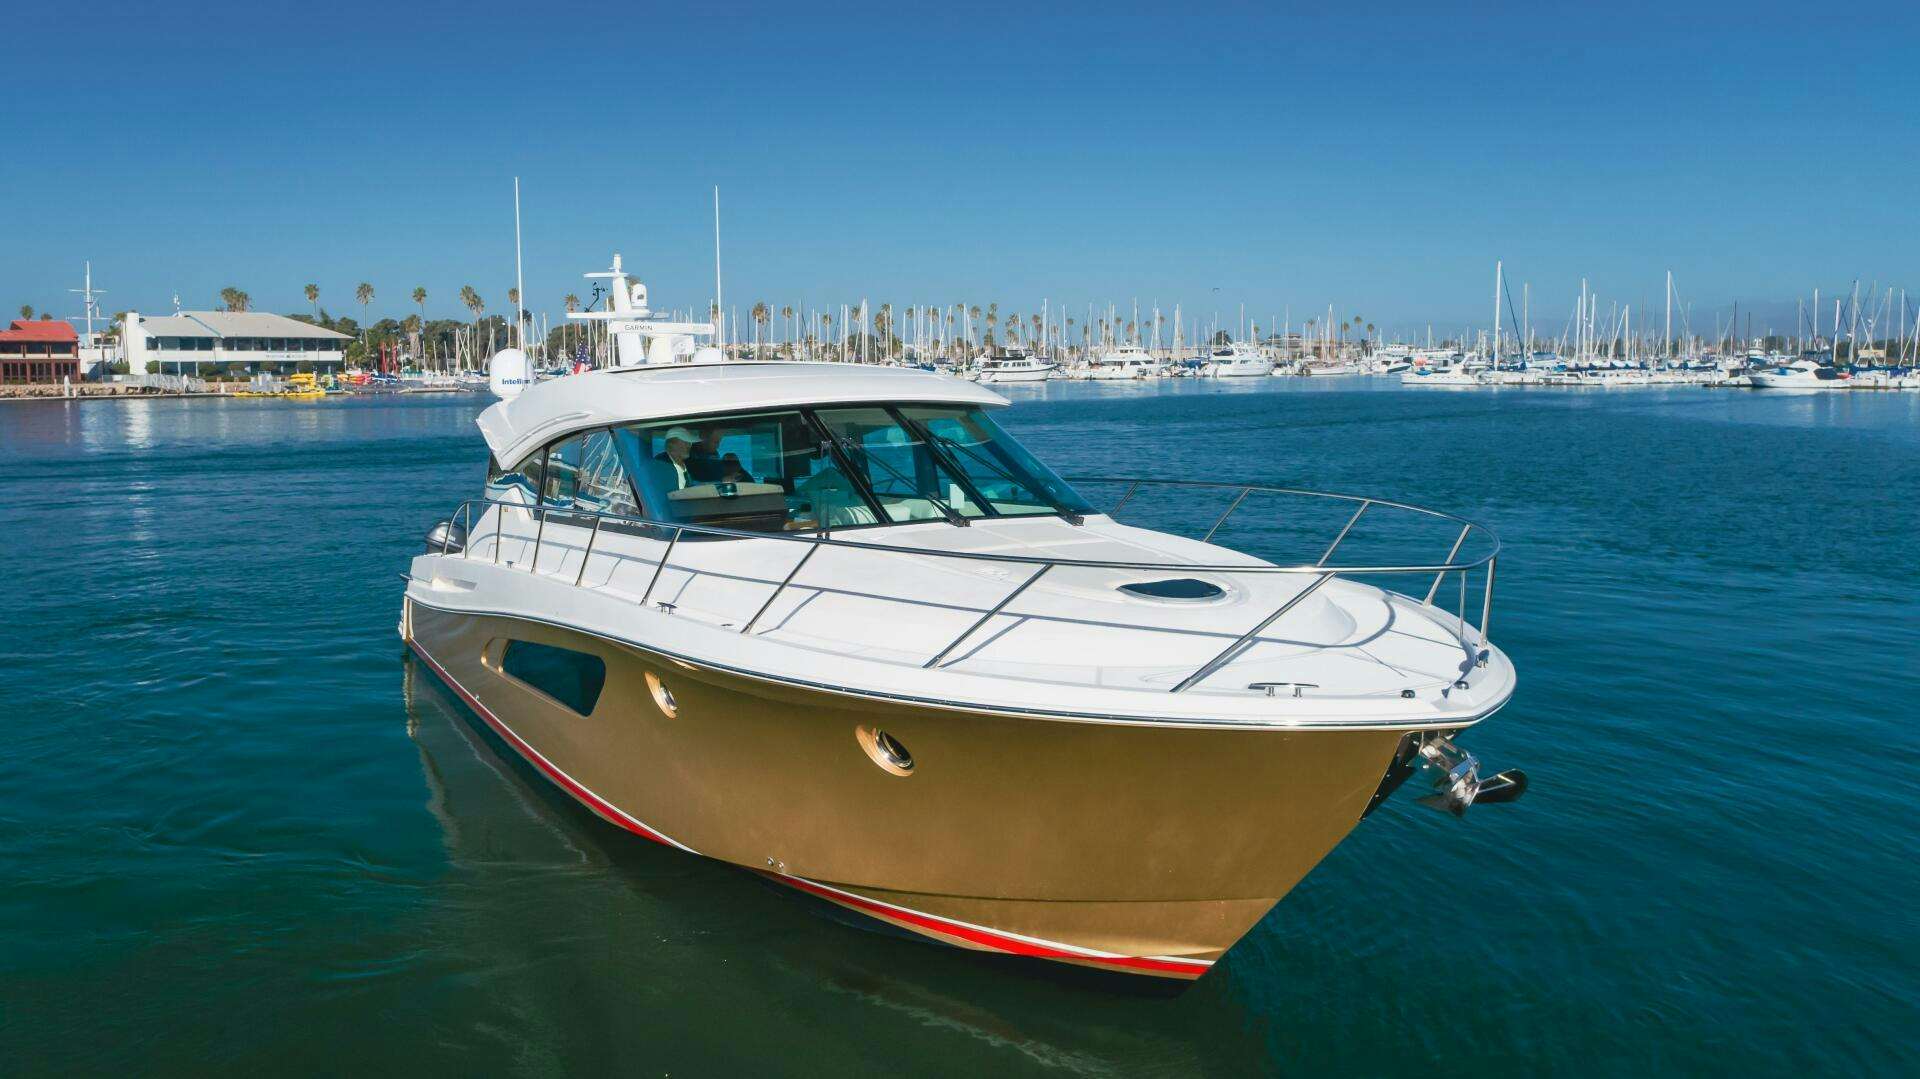 Foxfire
Yacht for Sale